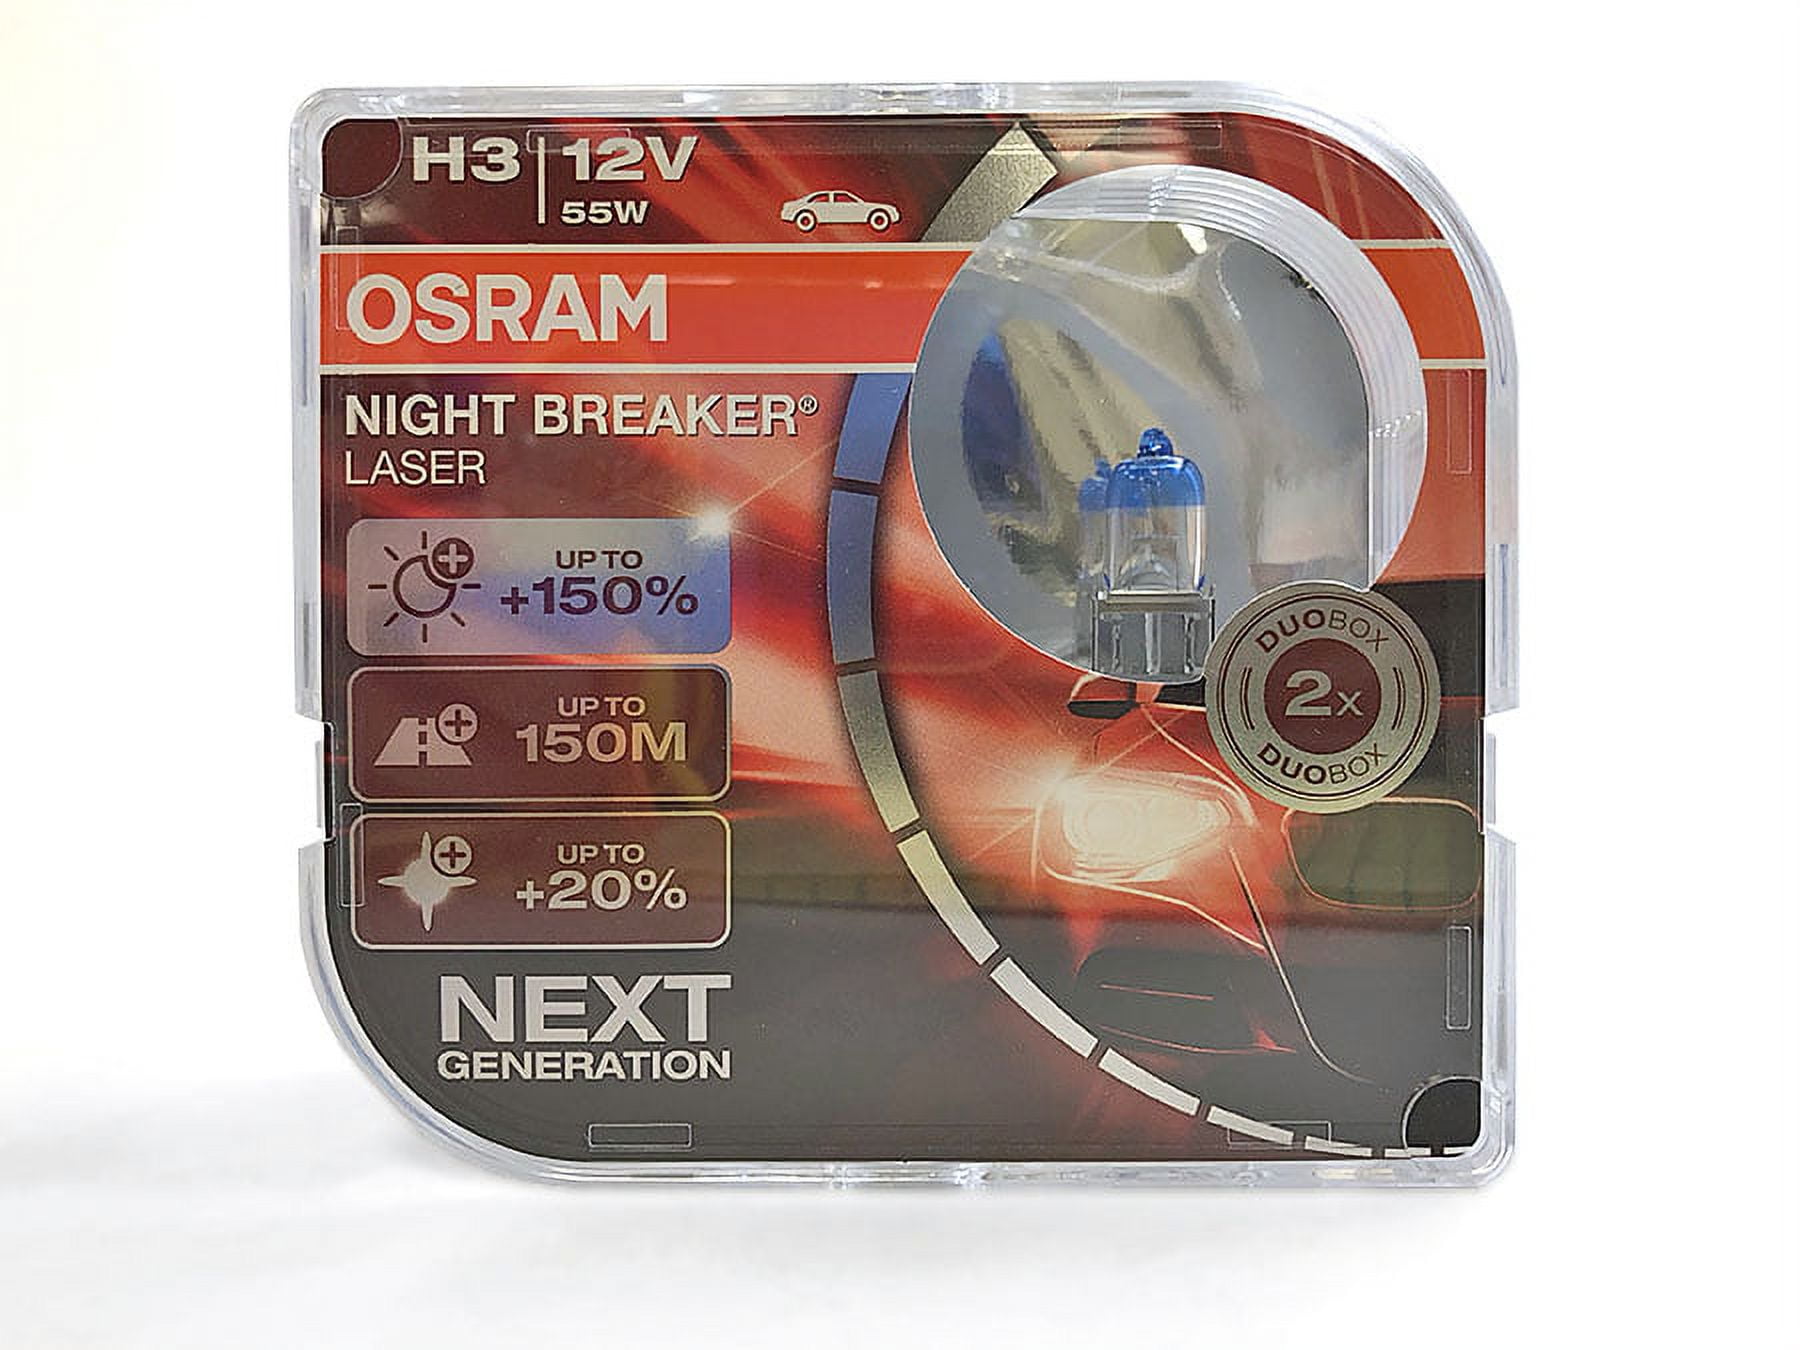 OSRAM H8 12V 35W PGJ19-1 NIGHT BREAKER® LASER +150% mehr Helligkeit 1 st.  OSRAM - Samsuns Group